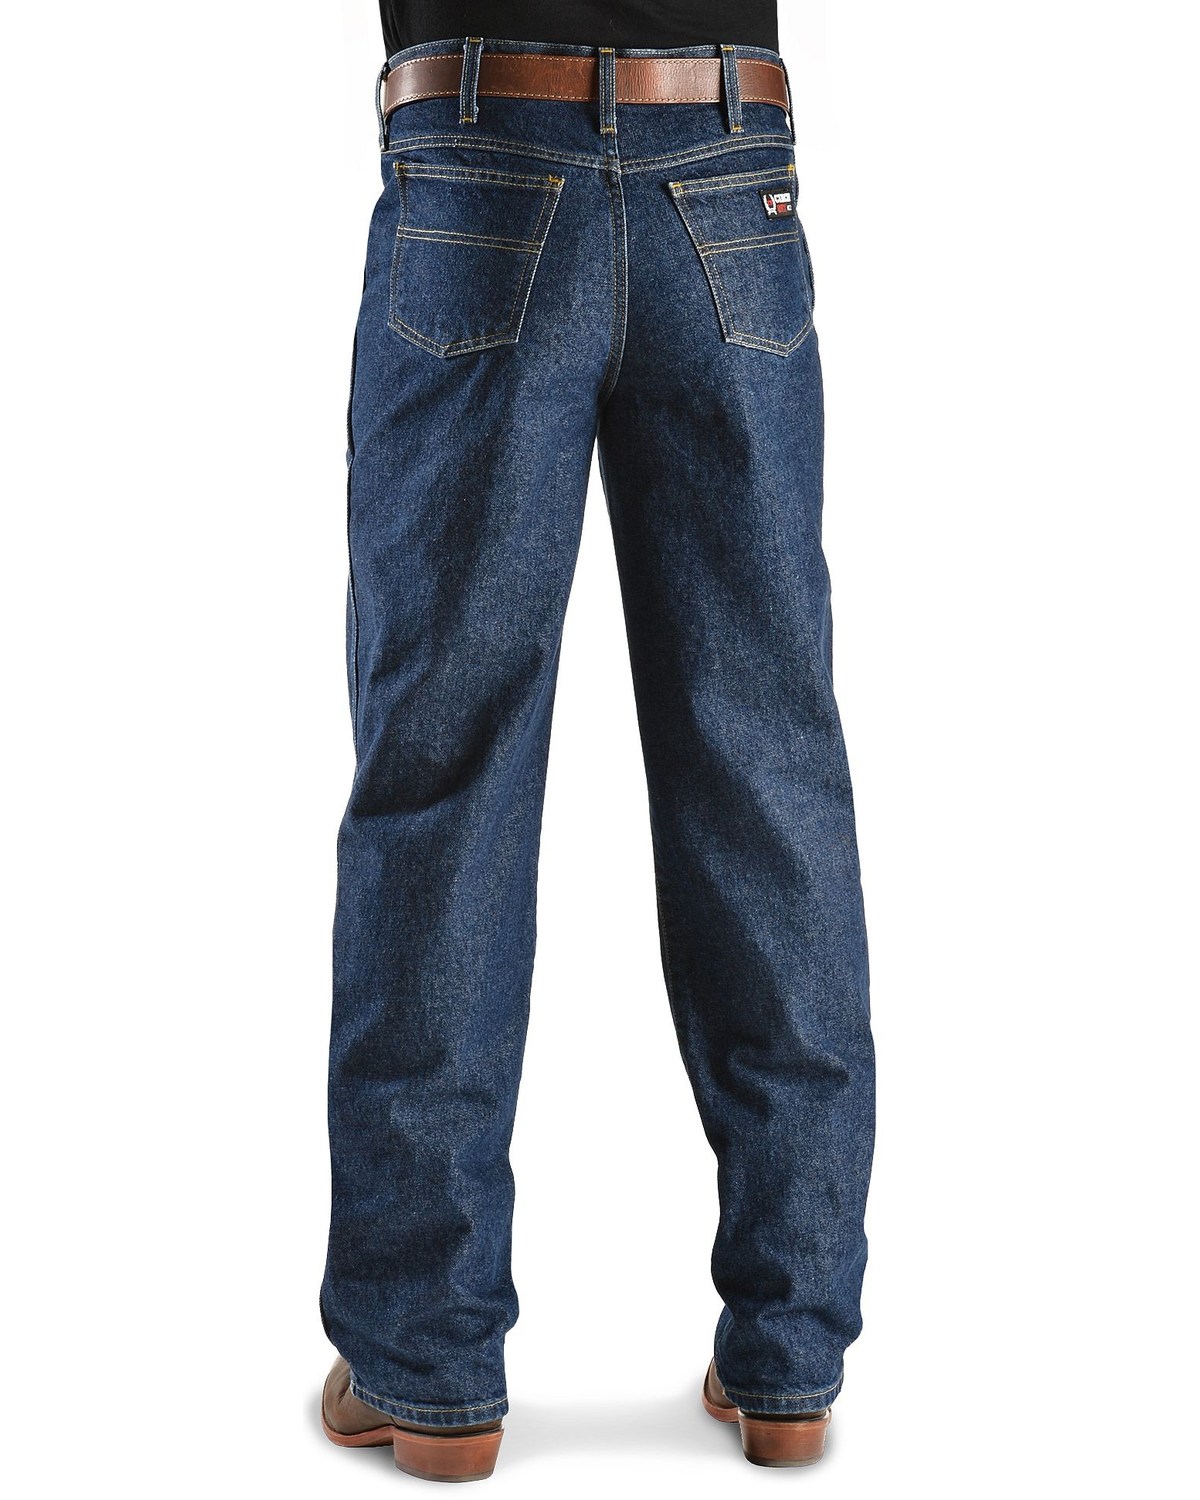 Cinch WRX Men's Green Label Flame Resistant Jeans